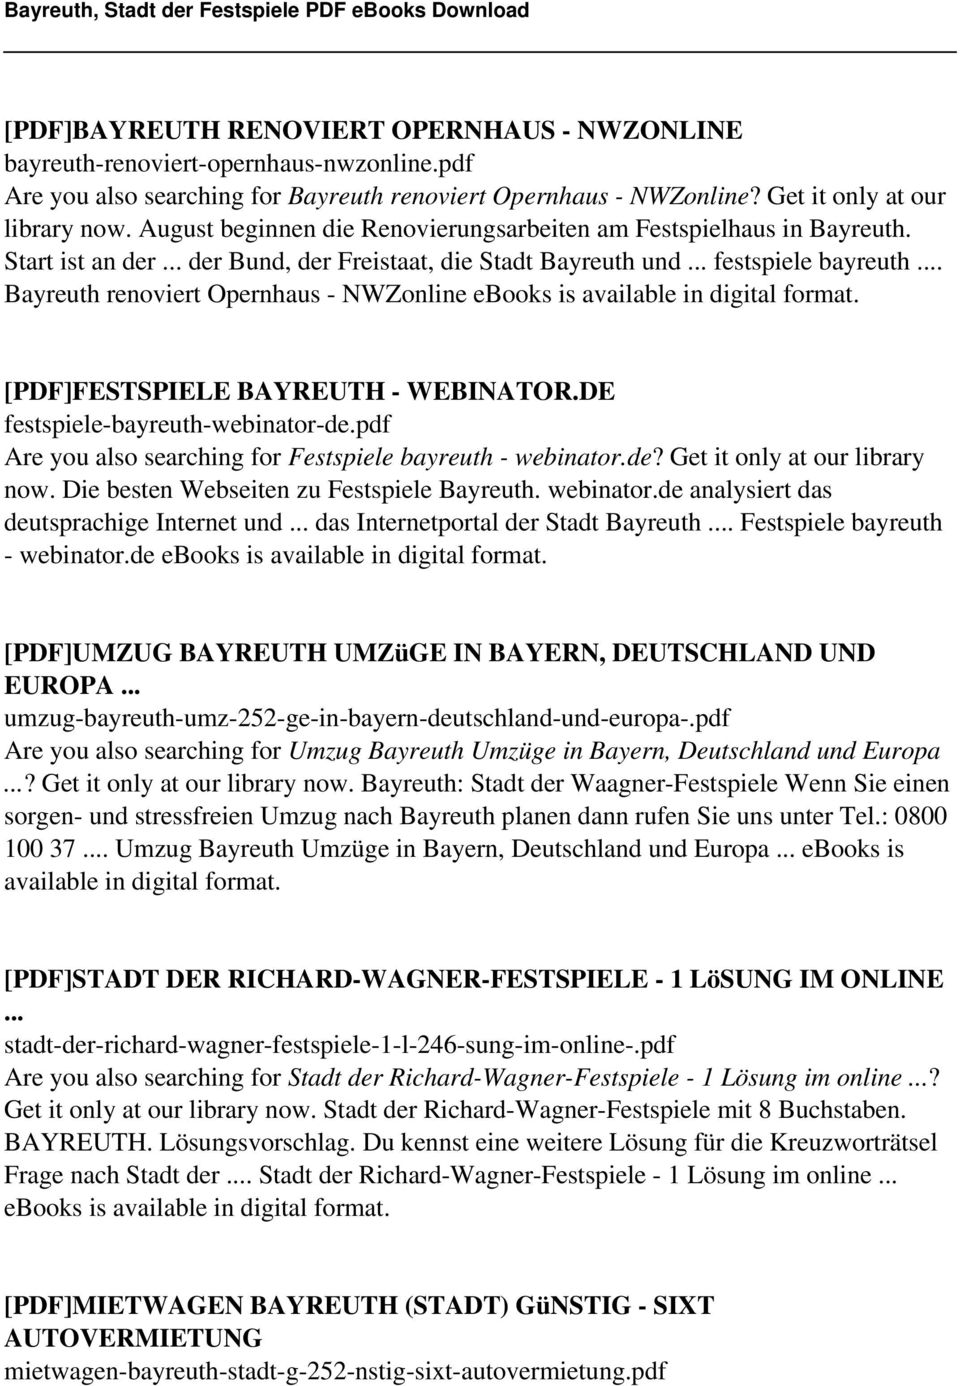 .. Bayreuth renoviert Opernhaus - NWZonline ebooks is [PDF]FESTSPIELE BAYREUTH - WEBINATOR.DE festspiele-bayreuth-webinator-de.pdf Are you also searching for Festspiele bayreuth - webinator.de? Get it only at our library now.